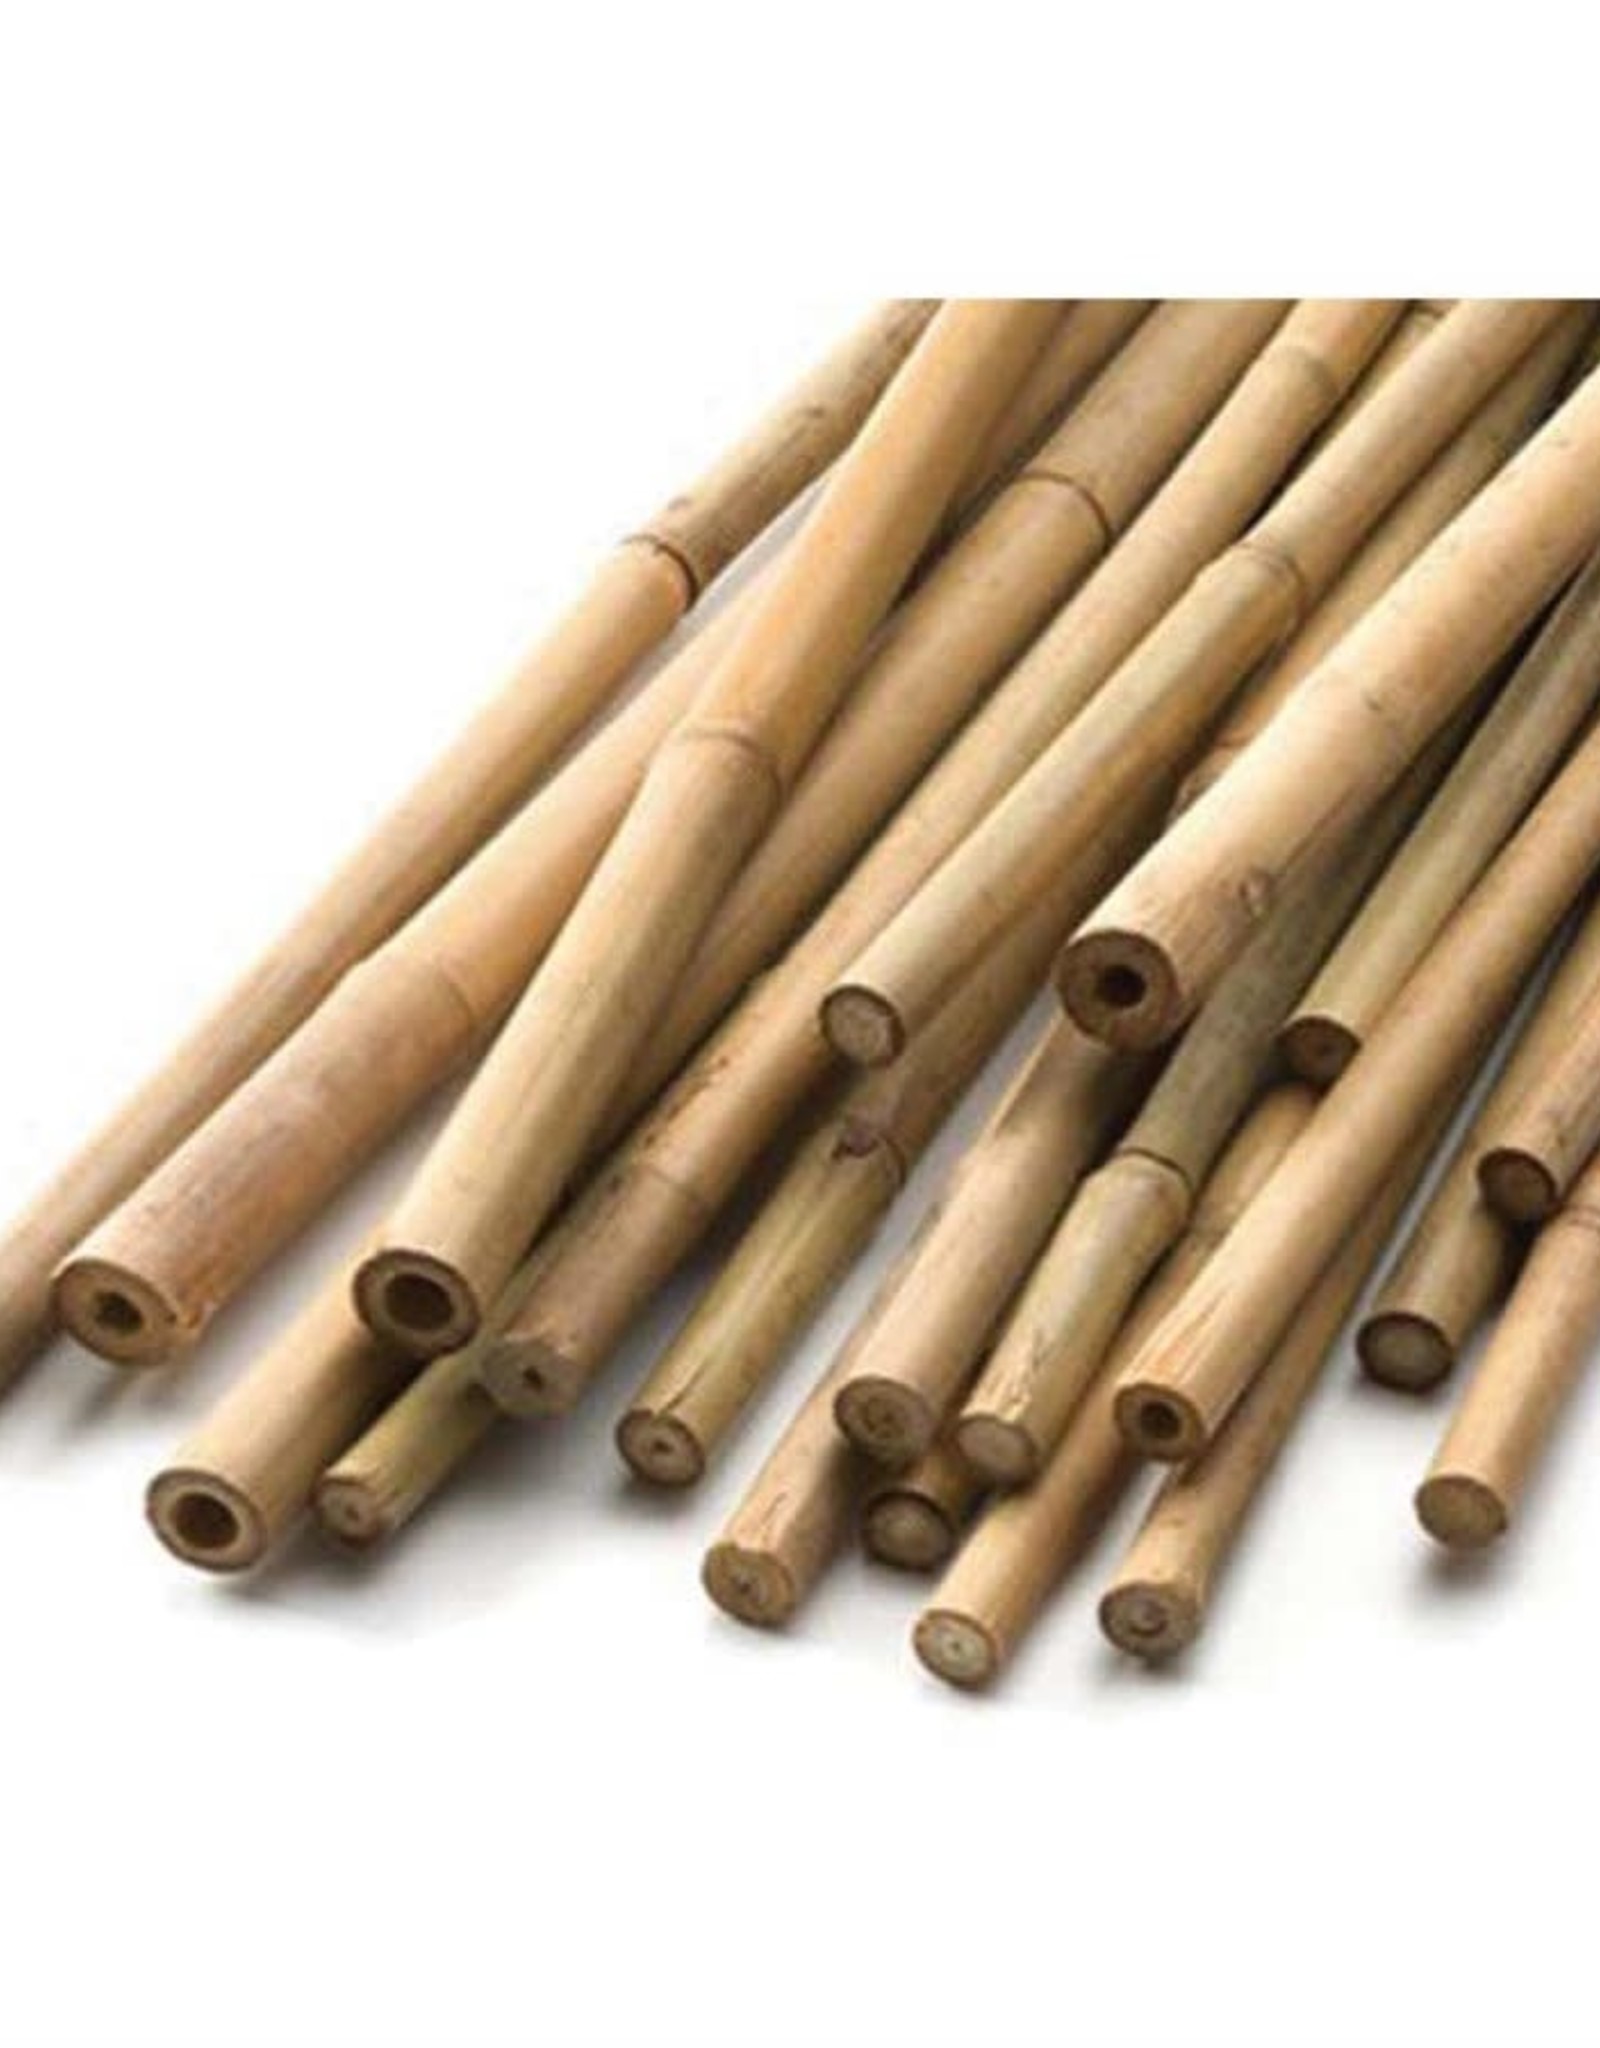 Natural HD Bamboo Cane 8'x 24-26mm